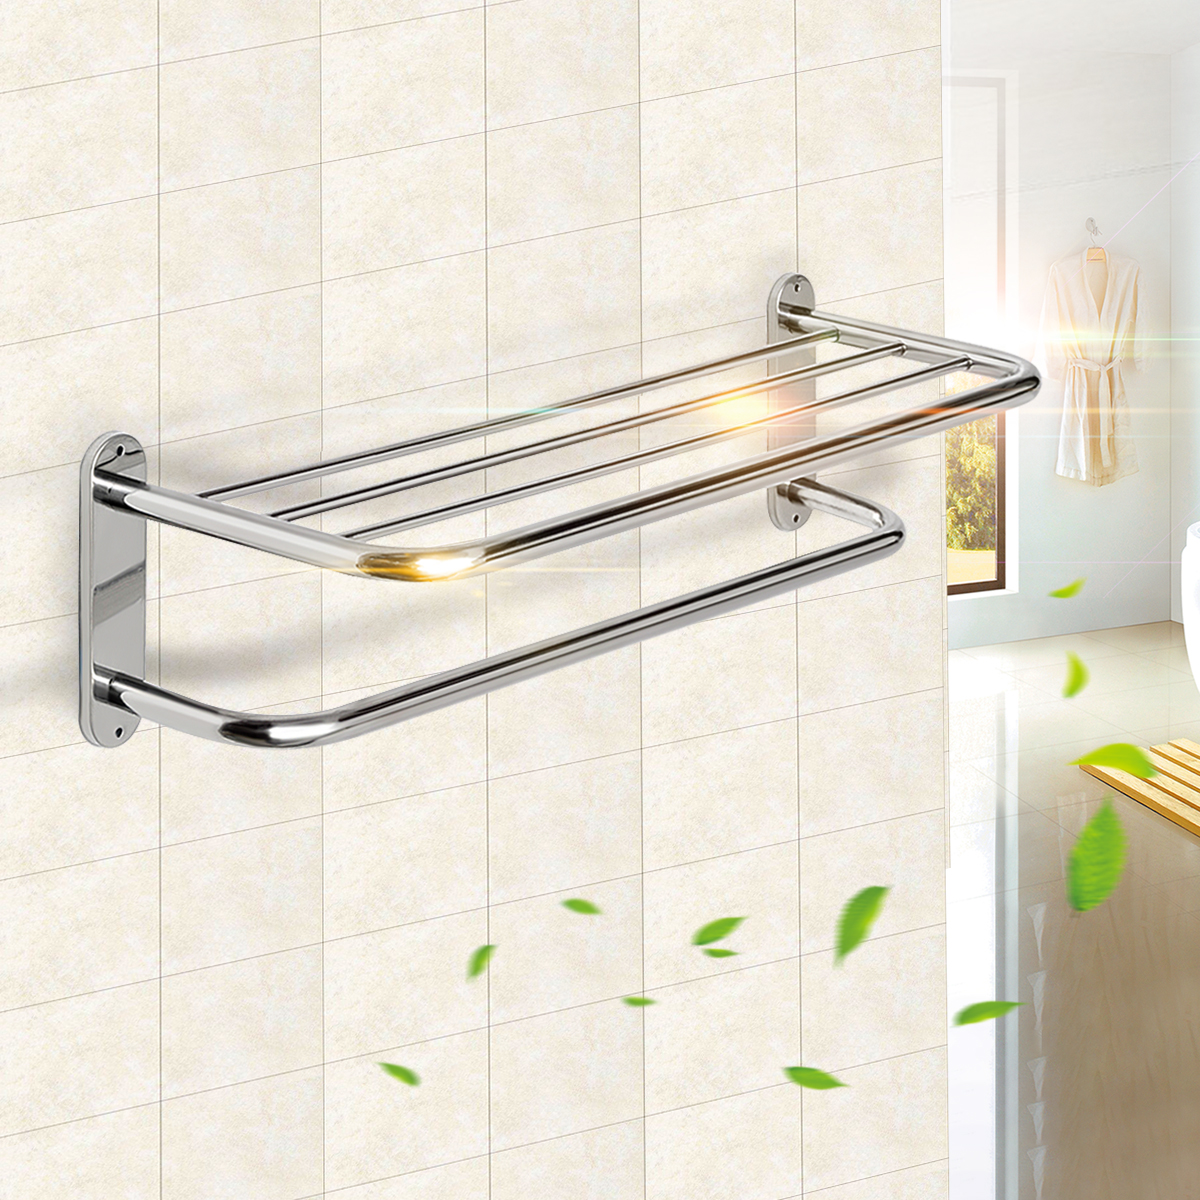 Chrome-Stylish-Bathroom-Wall-Mounted-Towel-Rail-Holder-Shelf-Storage-Rack-1258253-4